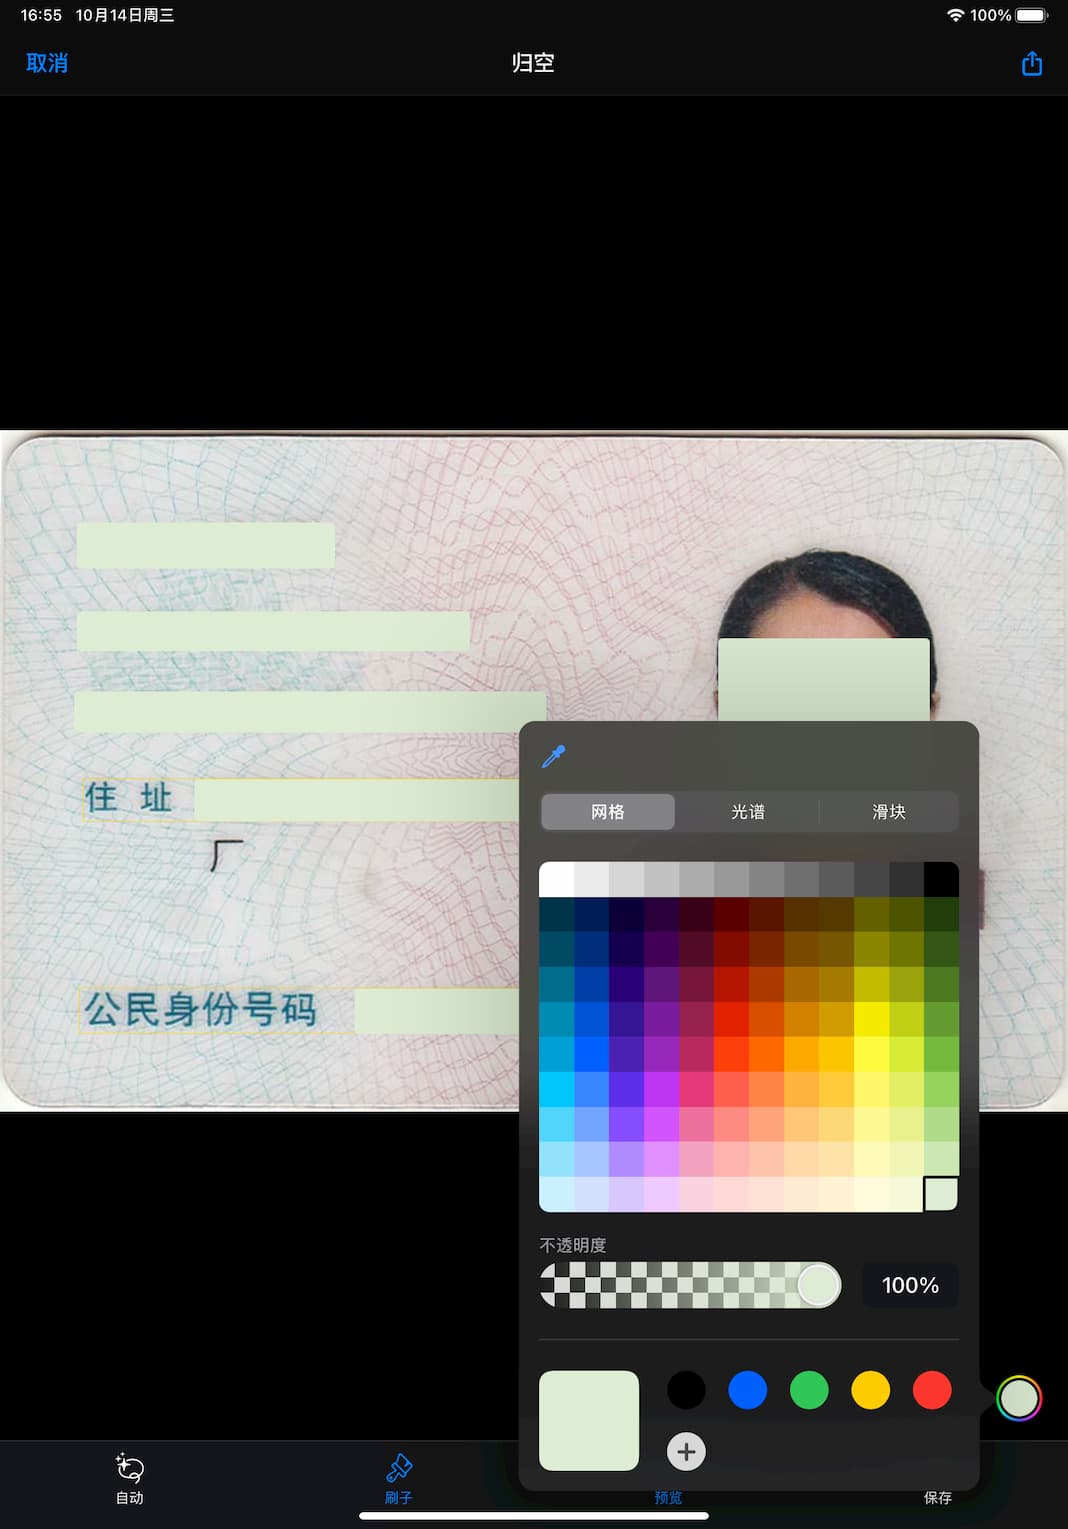 DAMA - 为图片自动打码，智能识别身份证号、手机号、人脸等隐私内容[iPhone] 4